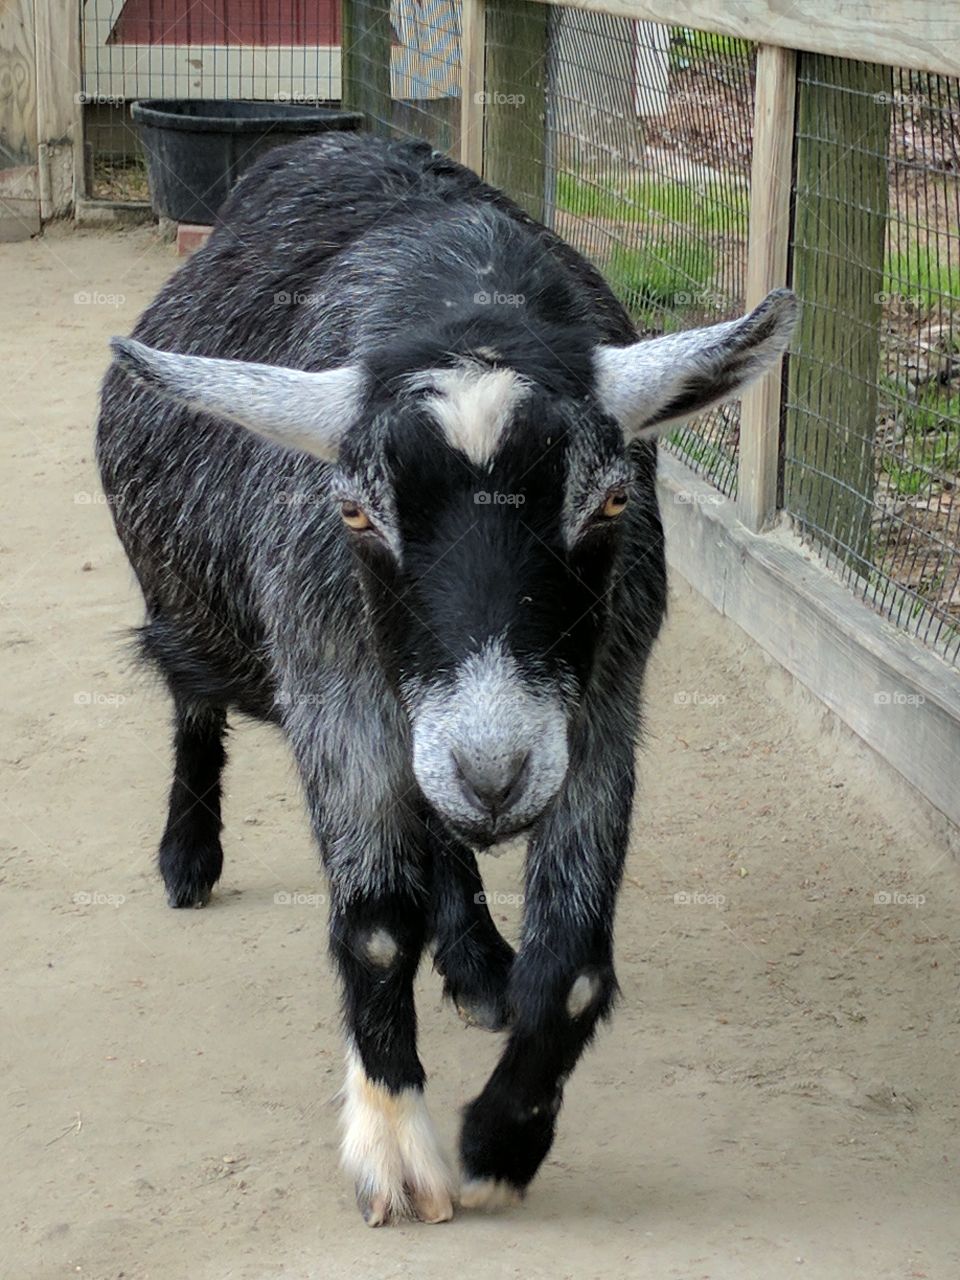 Billy goat